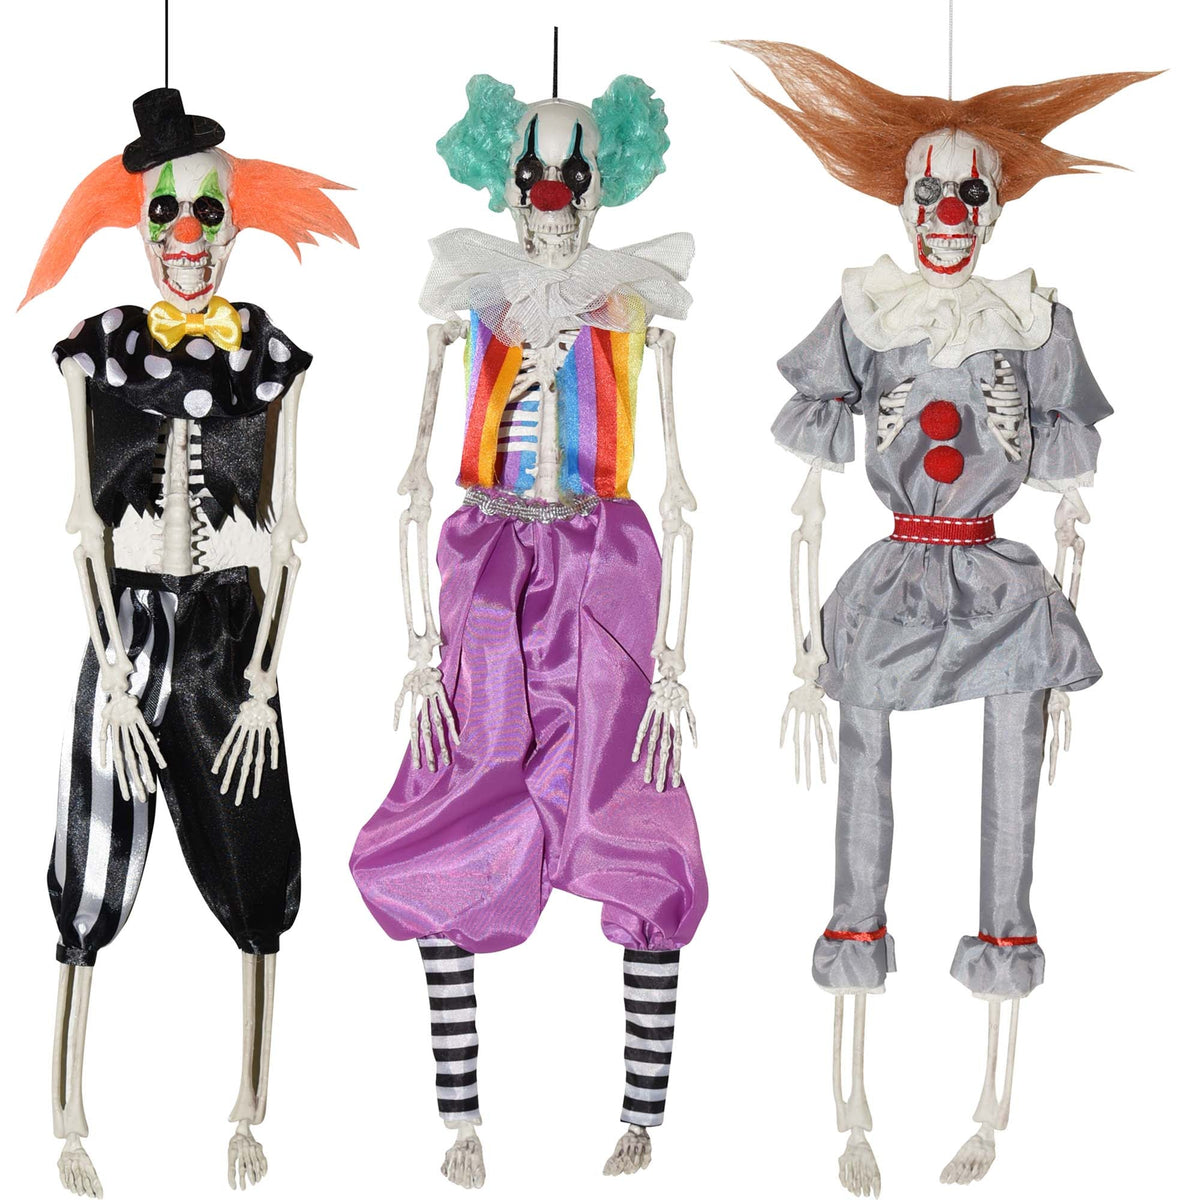 SUNSTAR INDUSTRIES Halloween Skeleton Clown, 16 Inches, Assortment, 1 Count